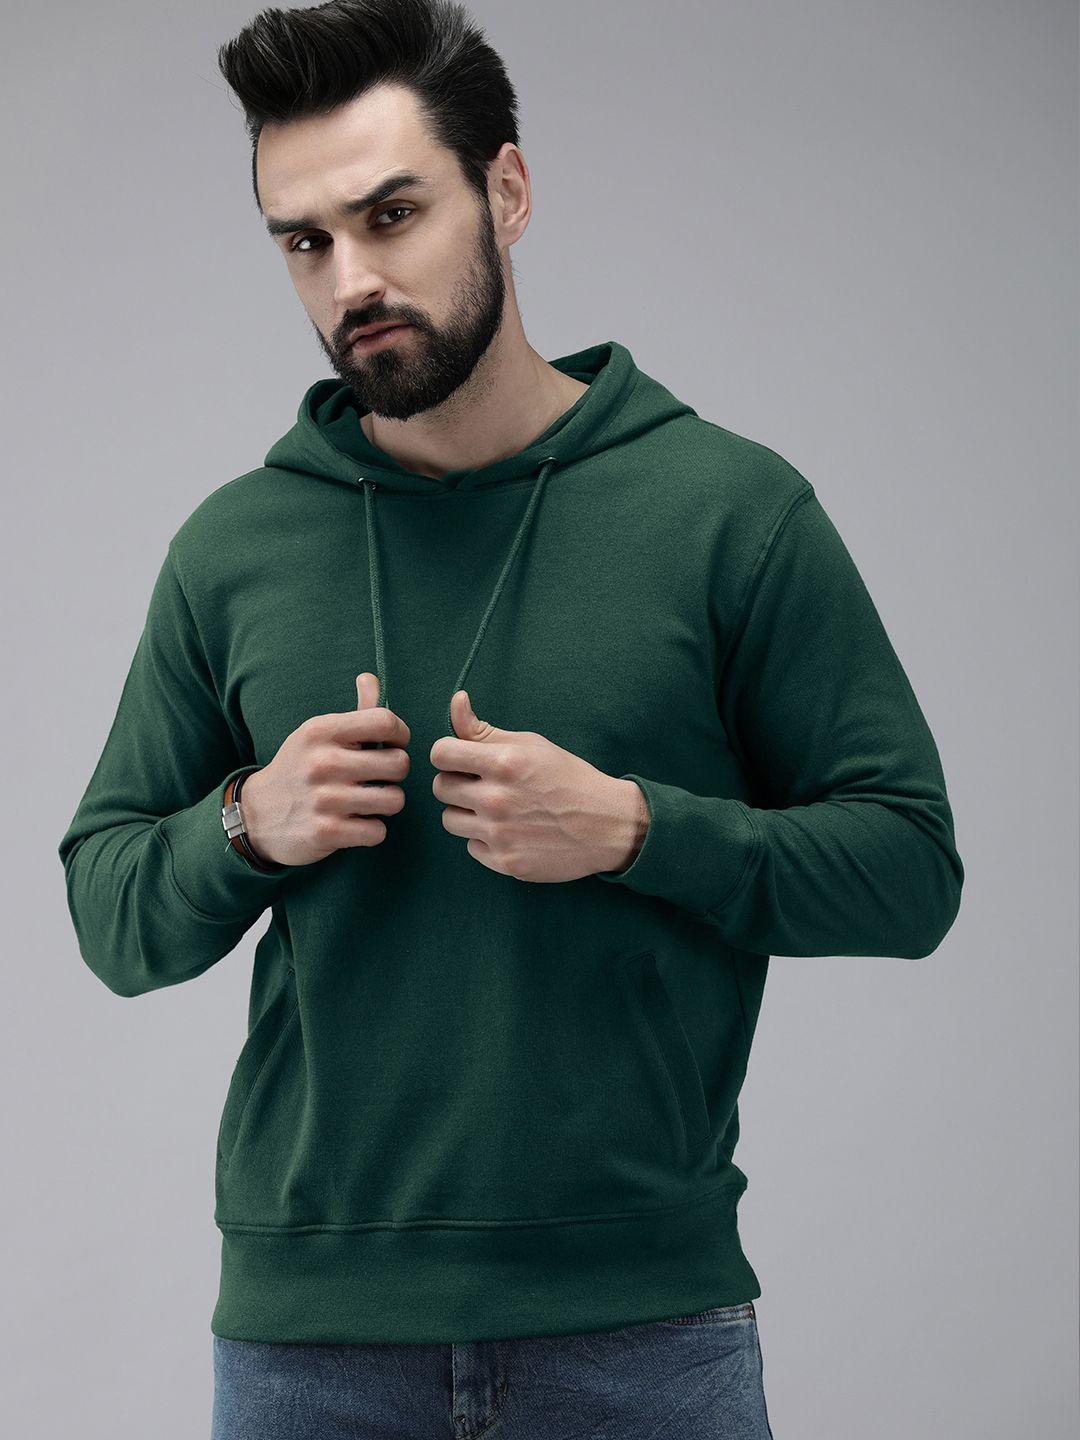 Roadster Men Teal Green Solid Hooded Sweatshirt